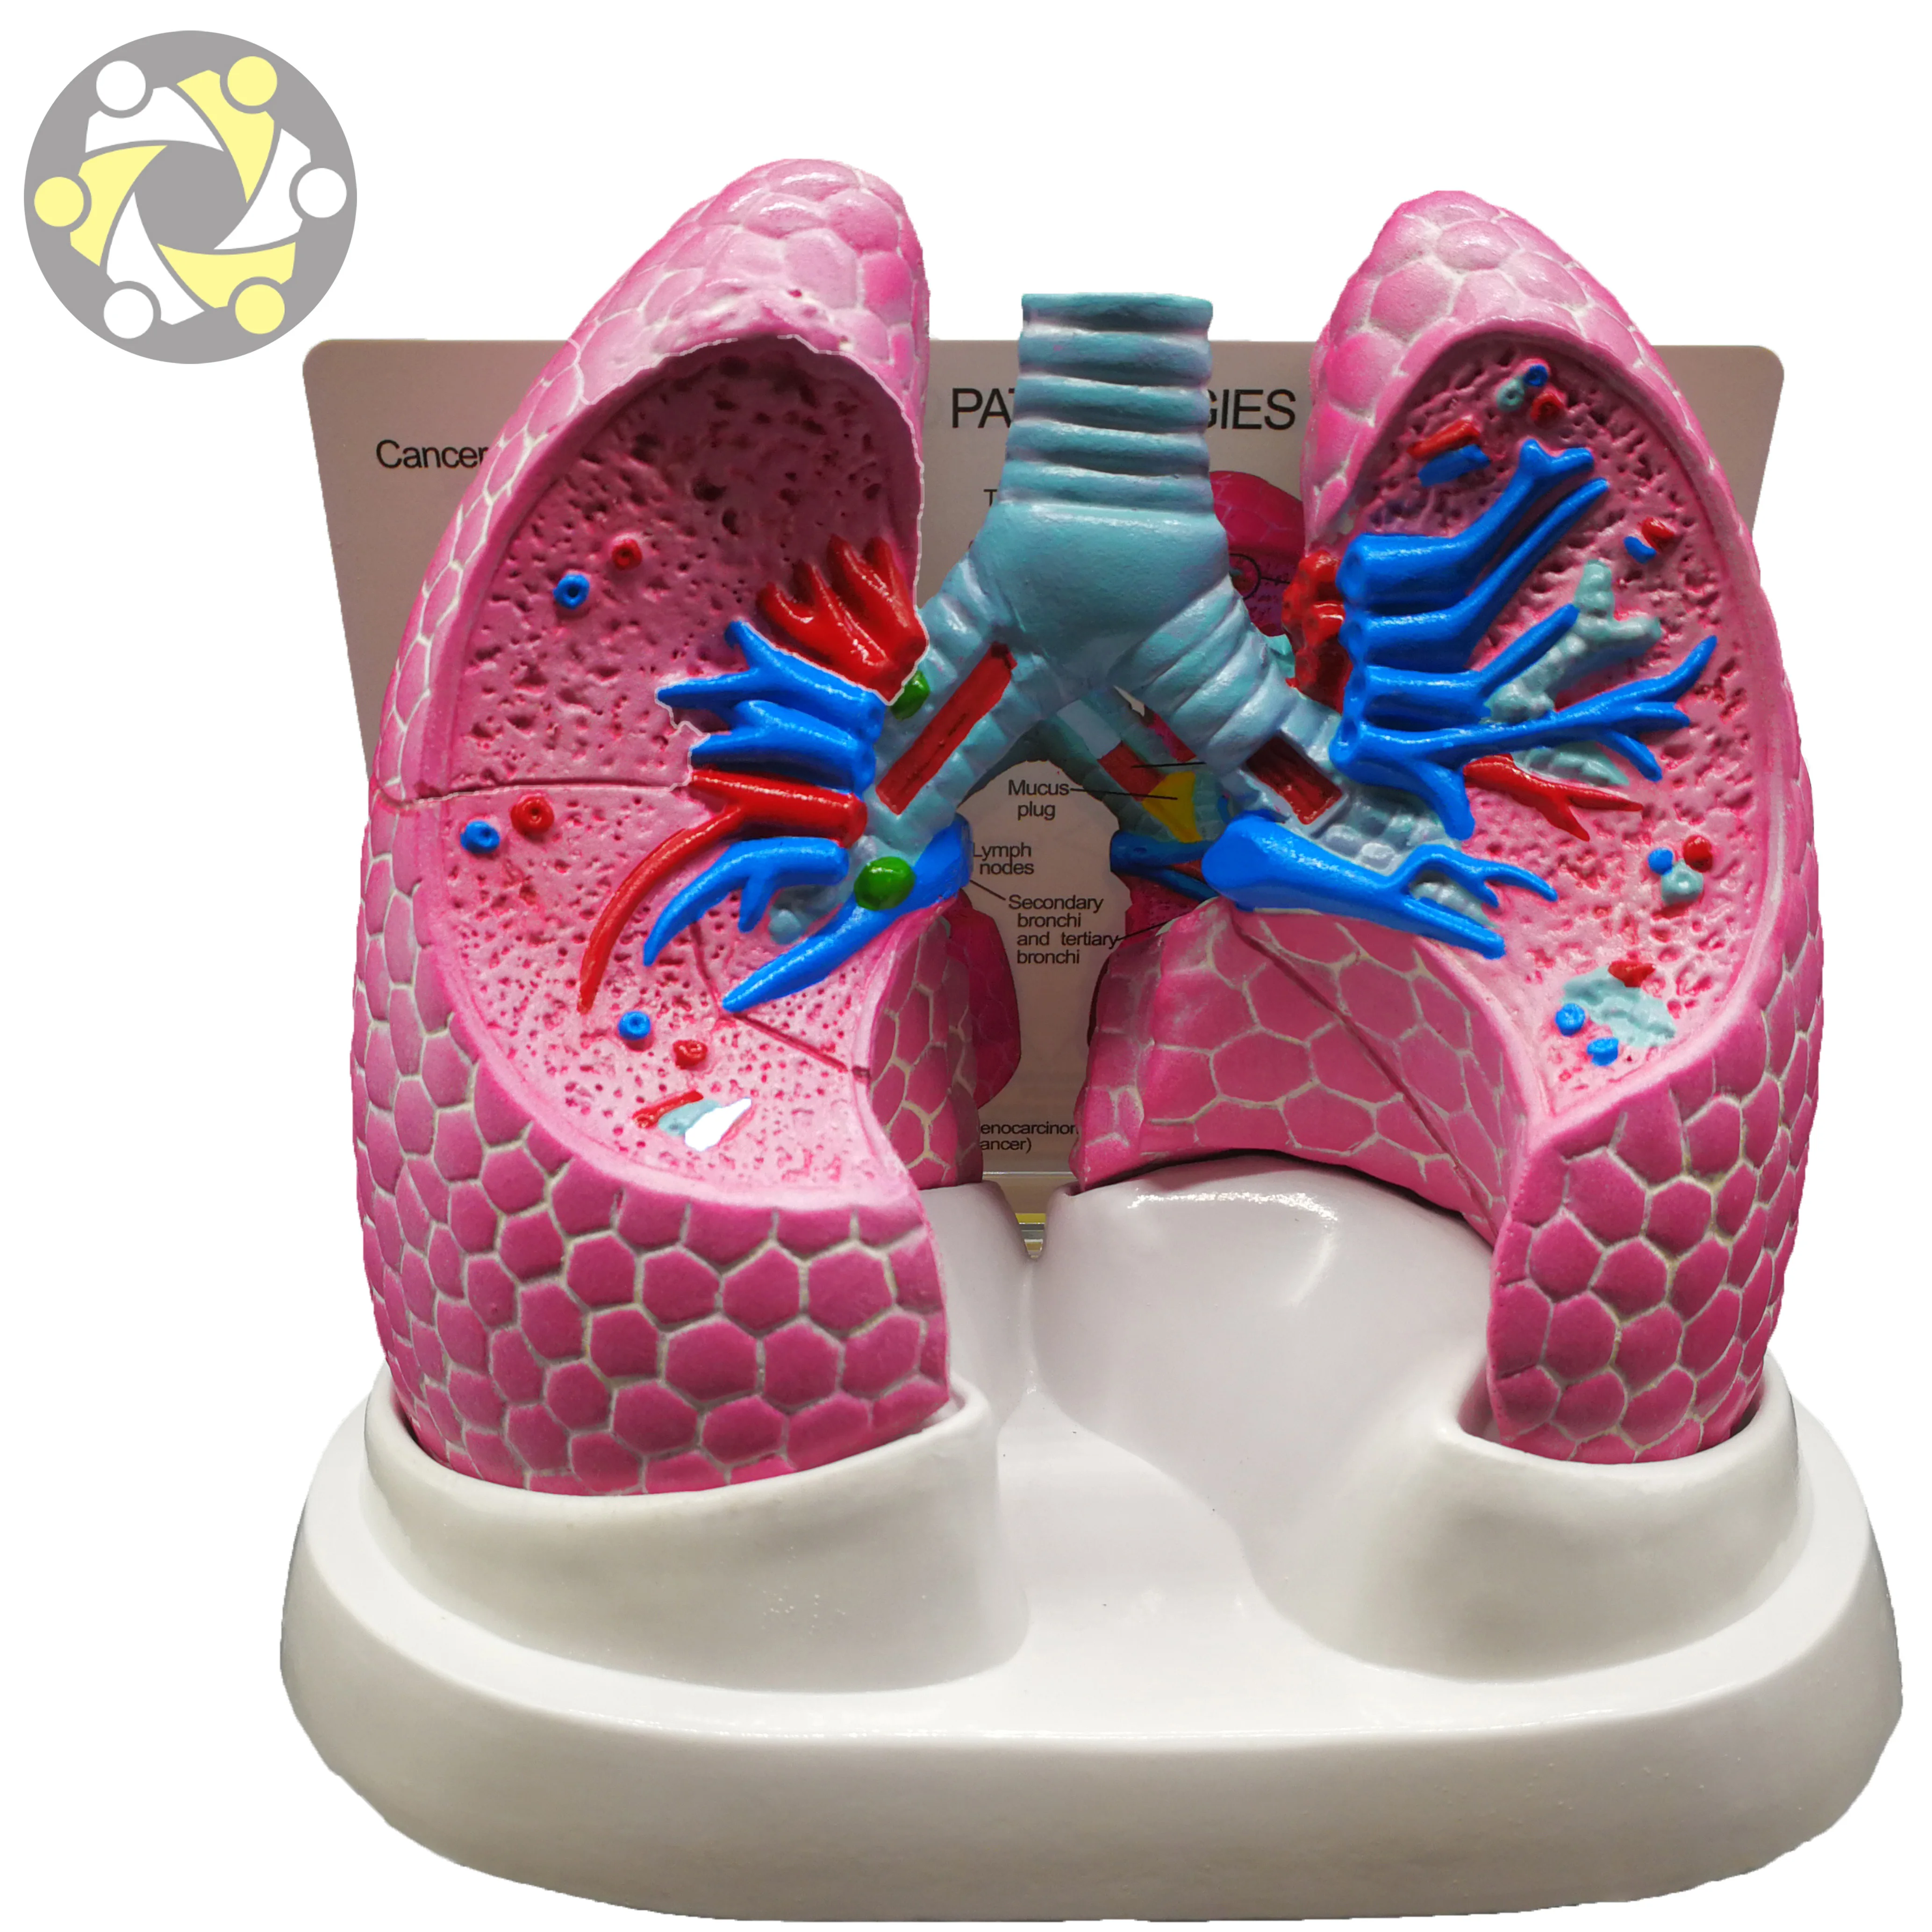 Pulmonary anatomy model